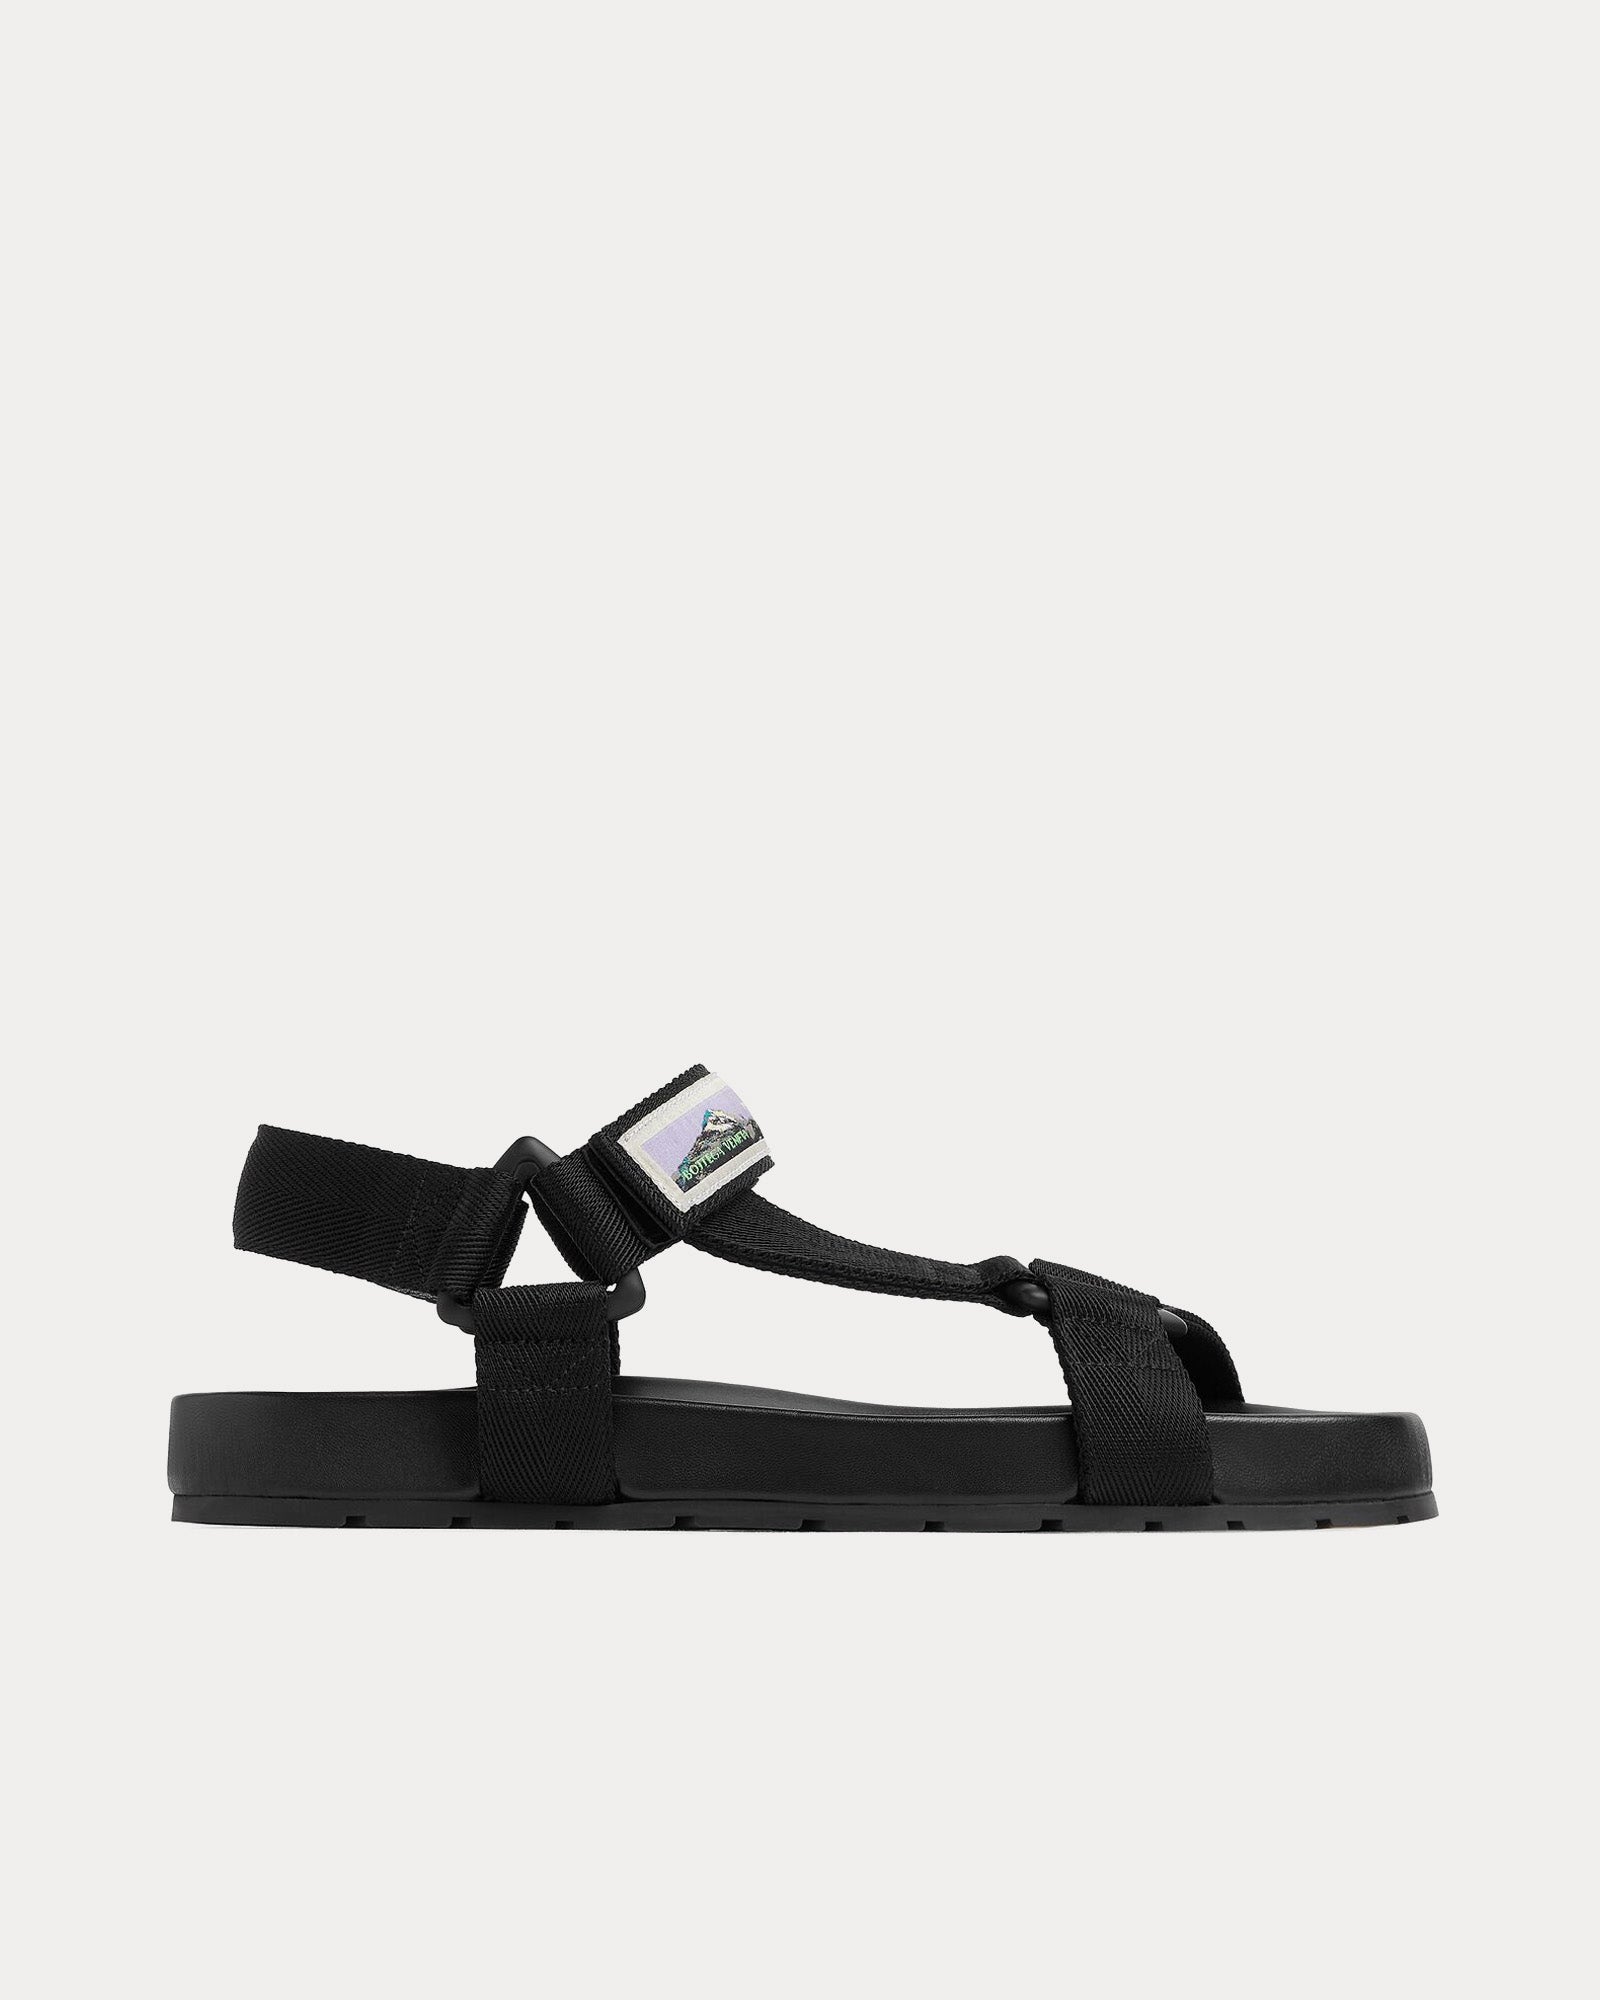 Bottega Veneta - Trip Technical Nylon Black Sandals